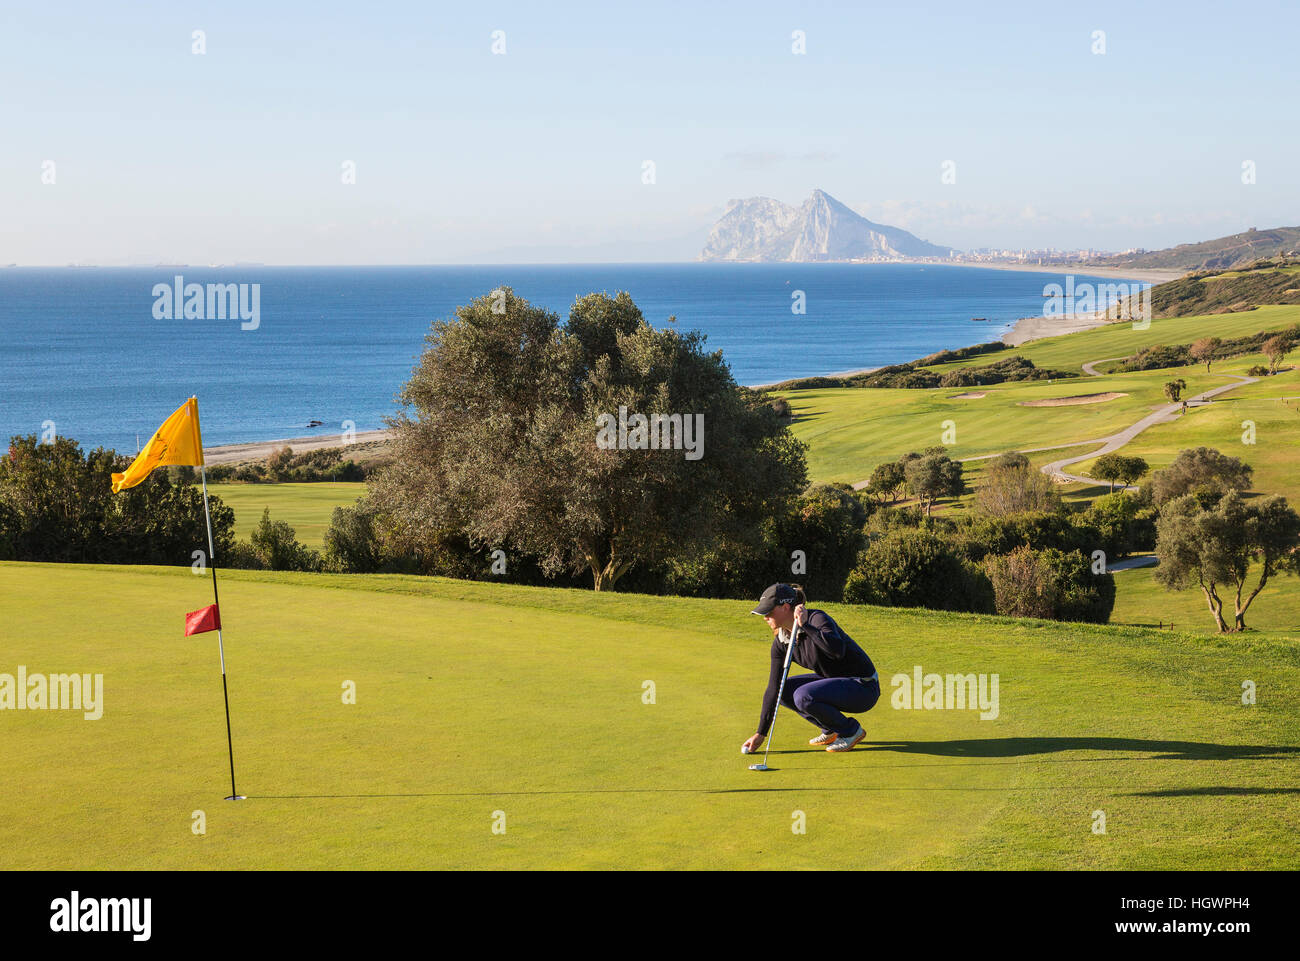 Golfer on putting green, La Alcaidesa Golf Resort with Mediterranean Sea and Rock of Gibraltar, Cádiz, Andalusia, Spain Stock Photo